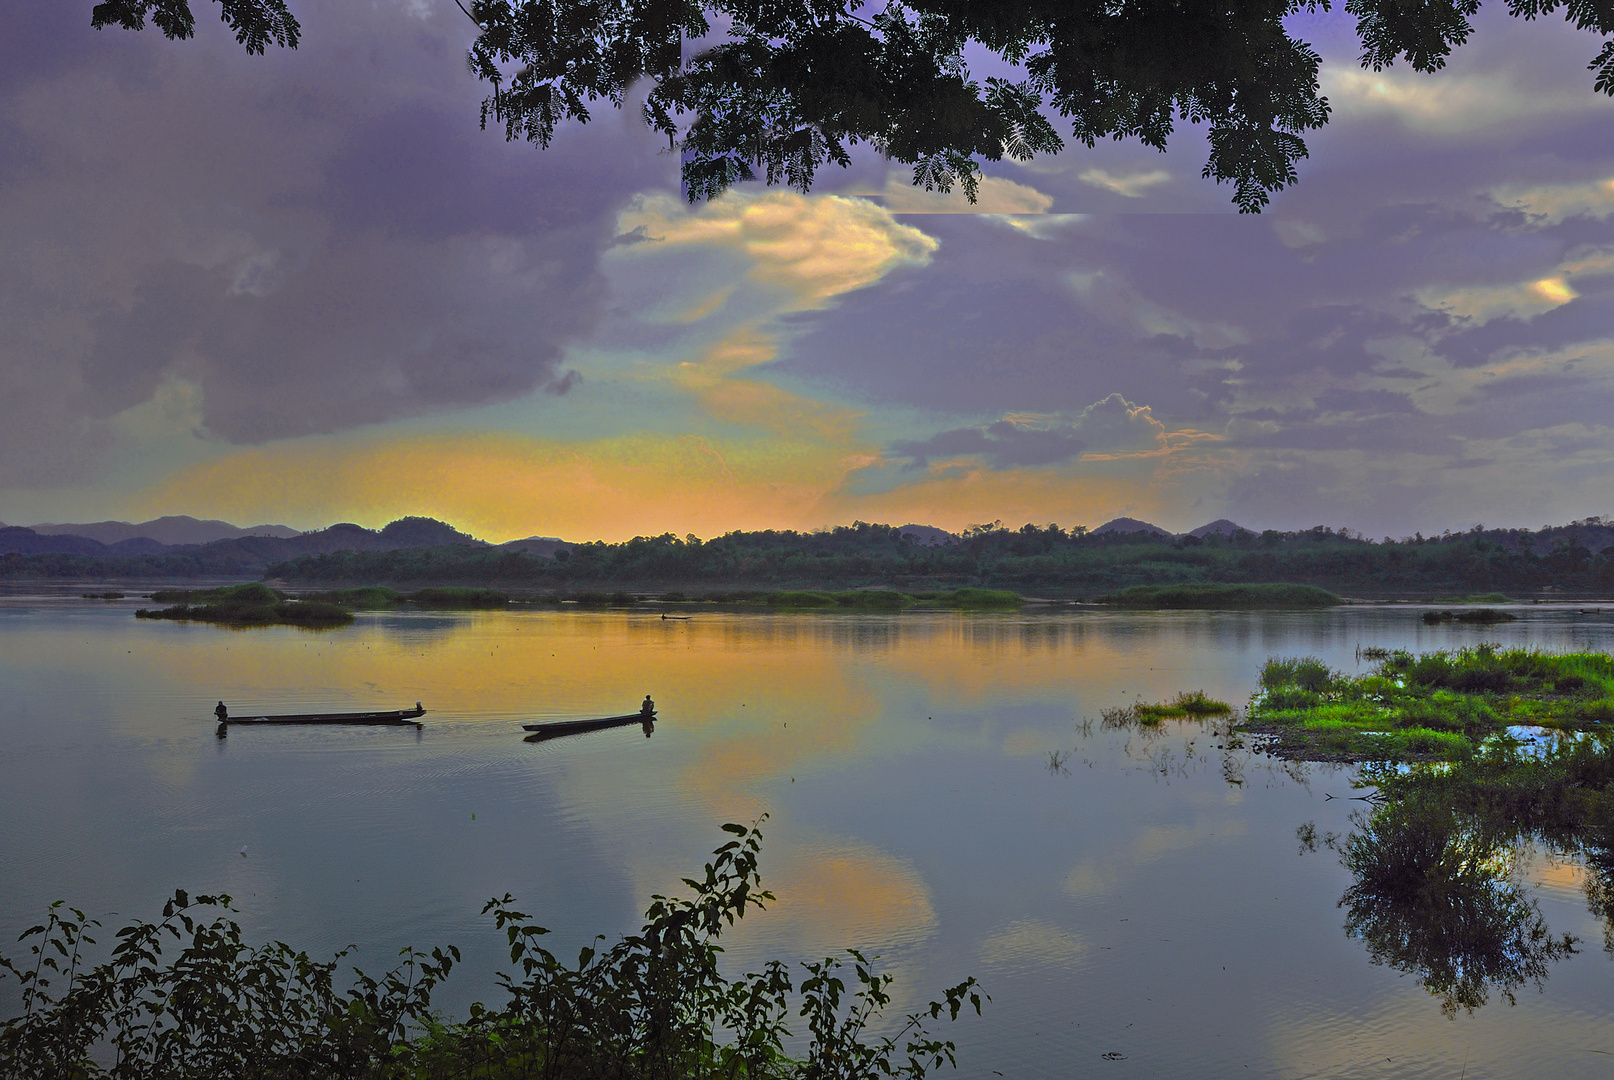 Sunset at the Mekong riverbank